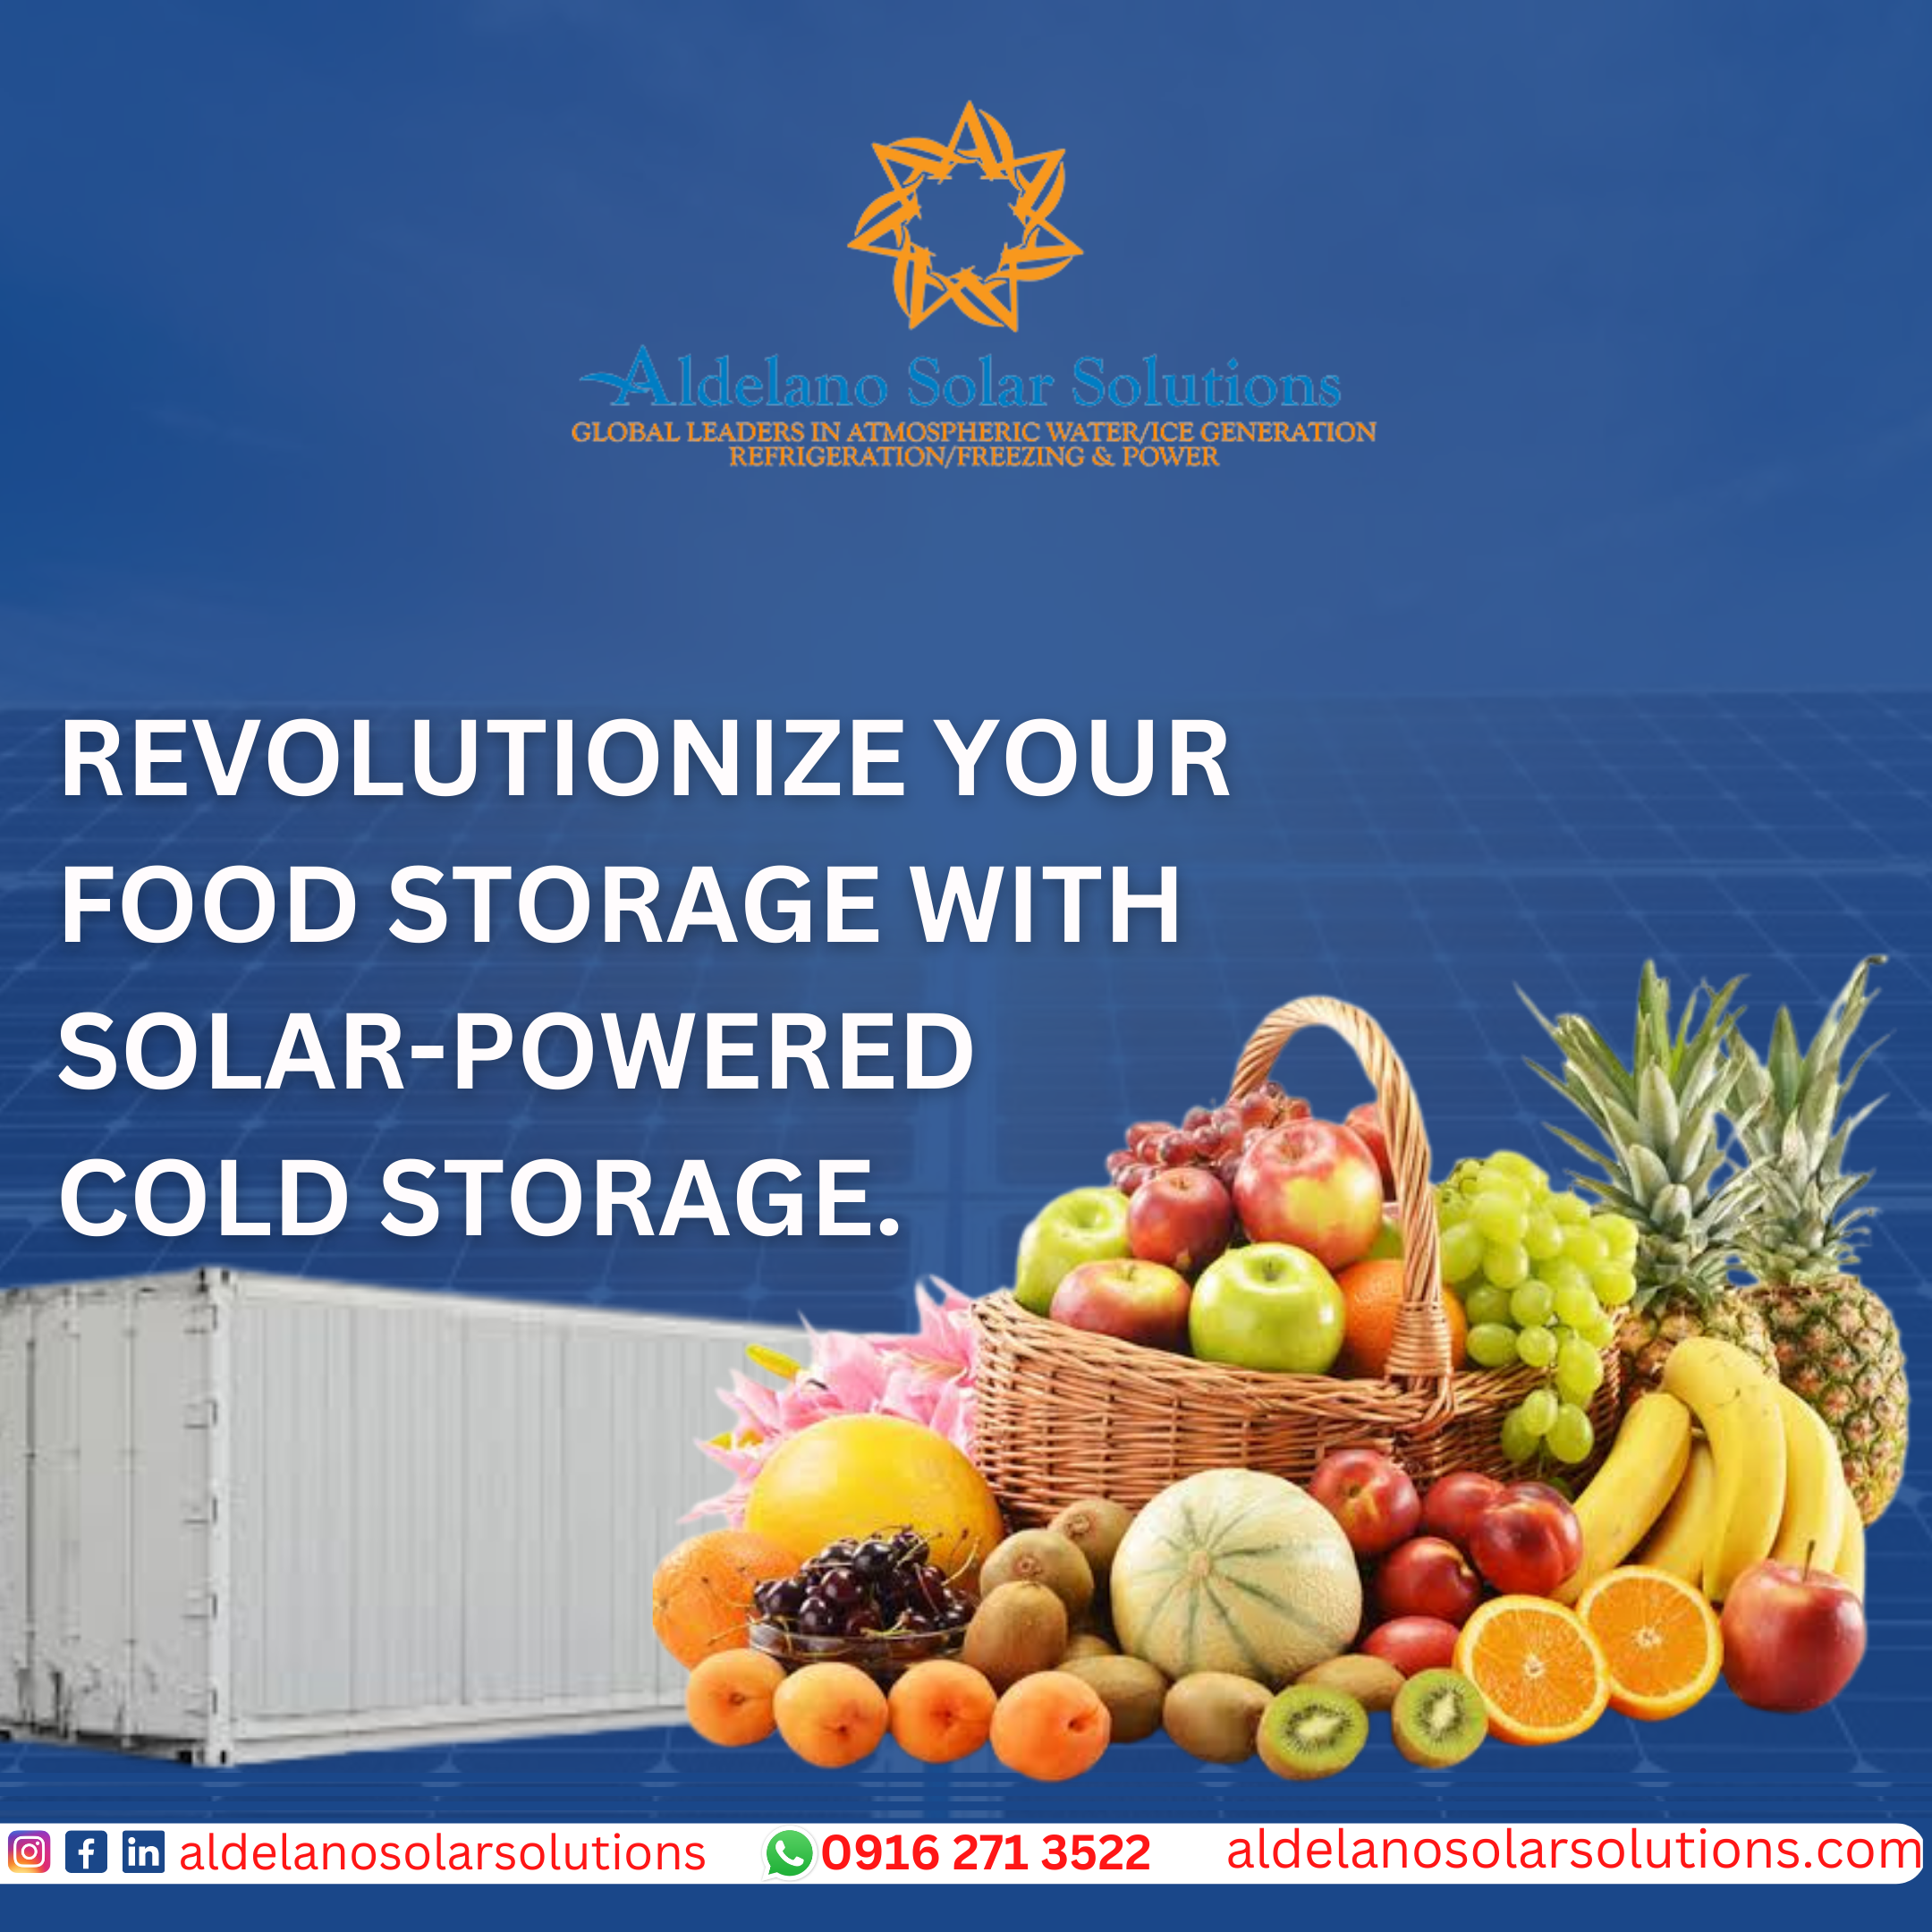 Revolutionize your food storage with solar-powered cold storage